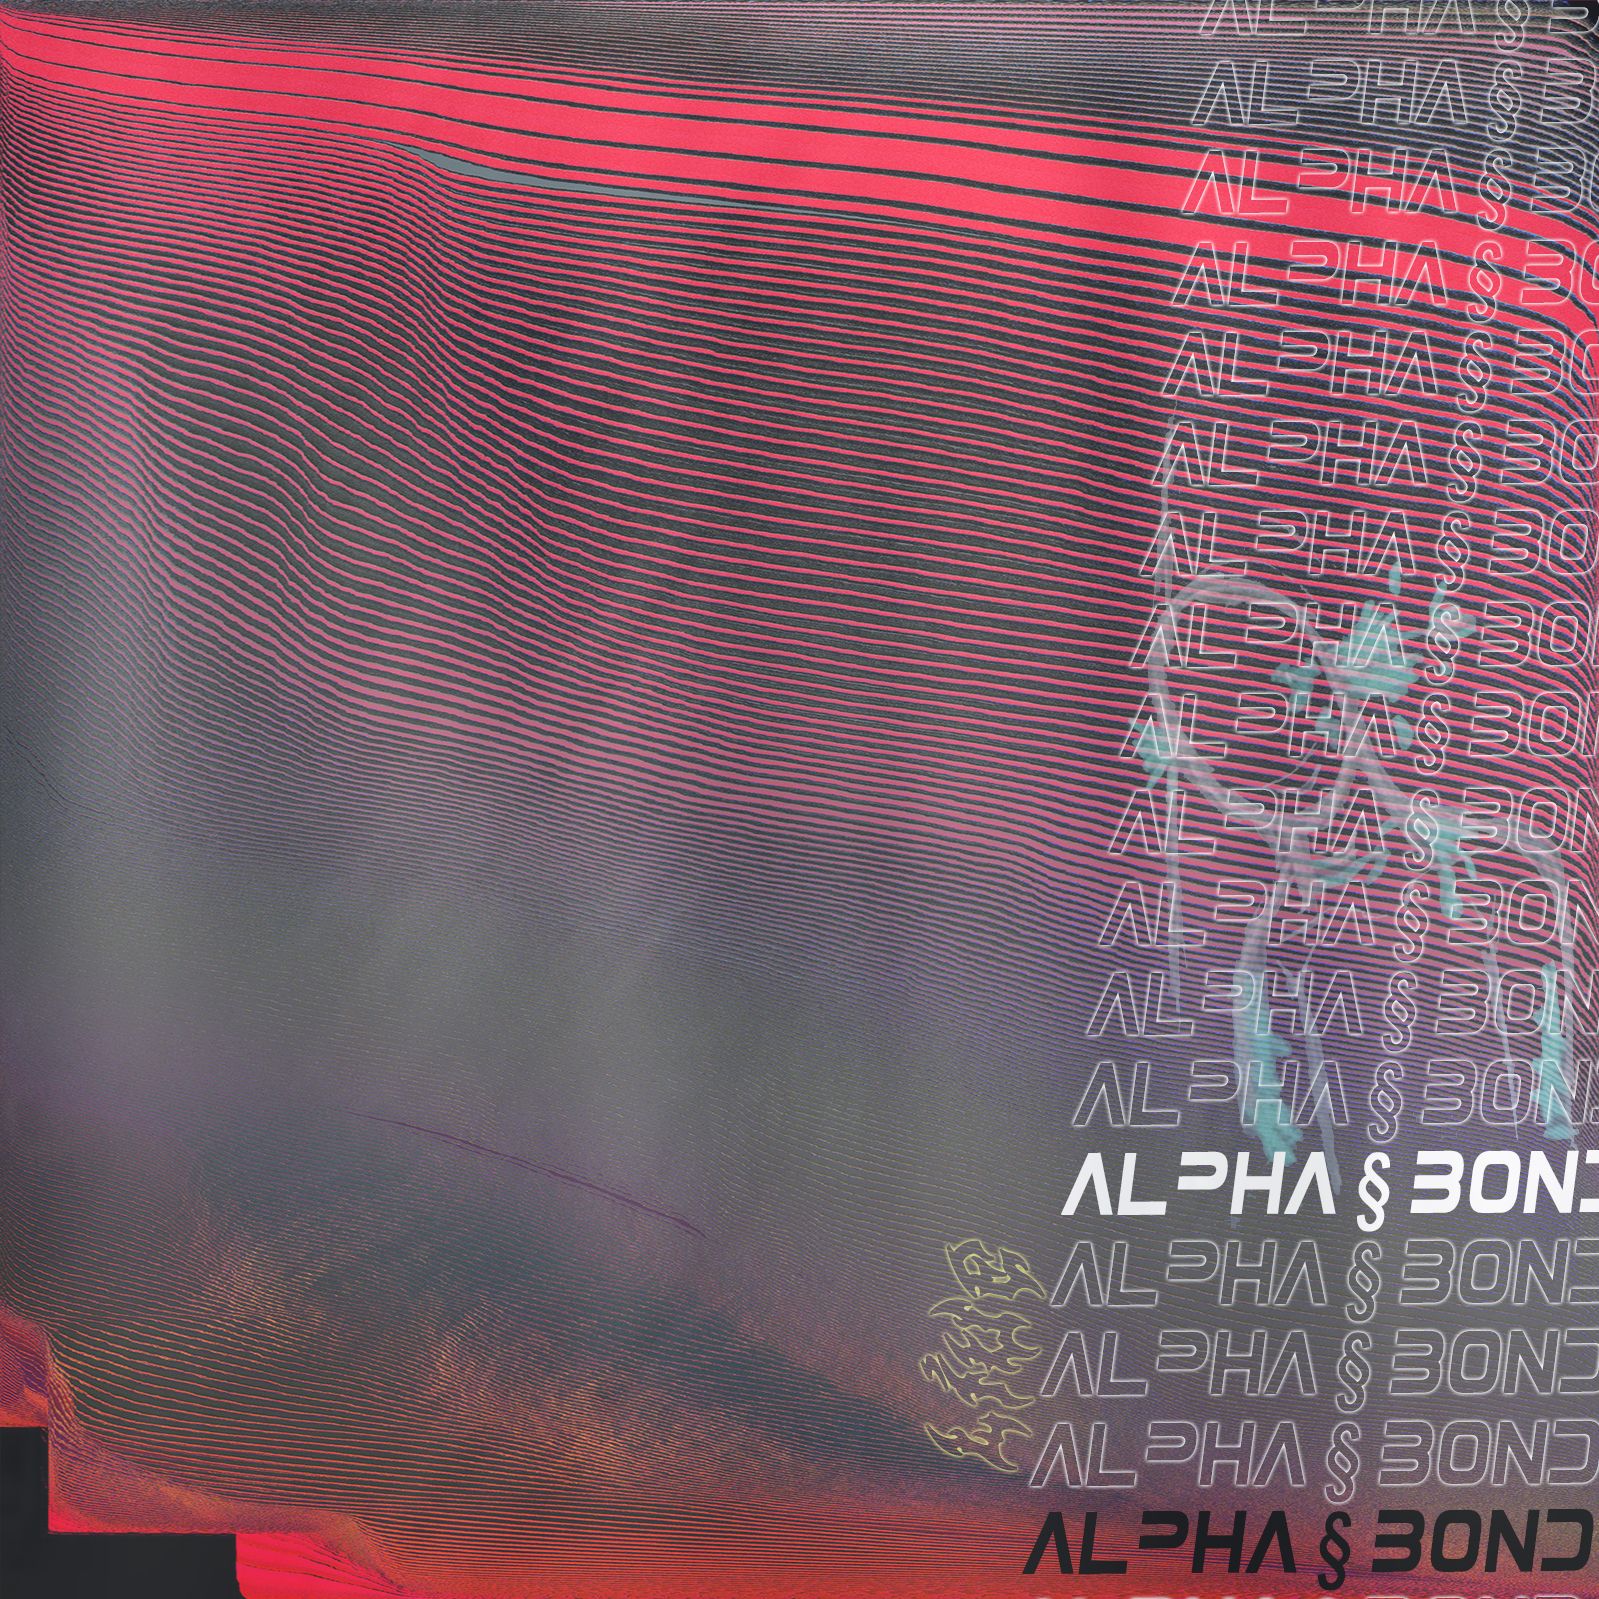 Daxistin alpha § bond